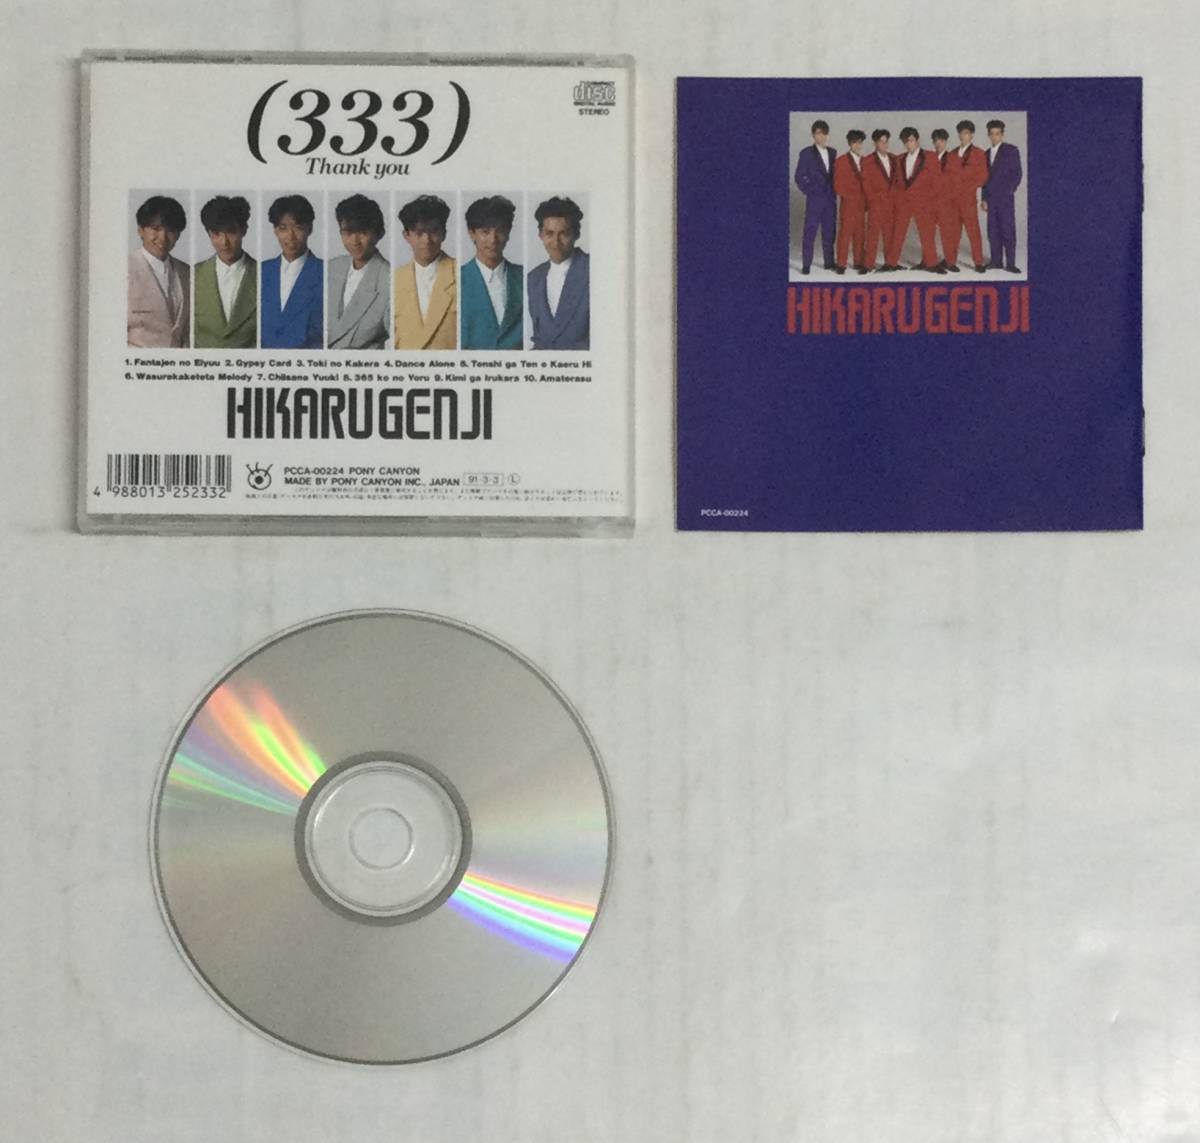 M231209-3-108 музыка CD музыка (333) Thank you свет GENJI первое издание 